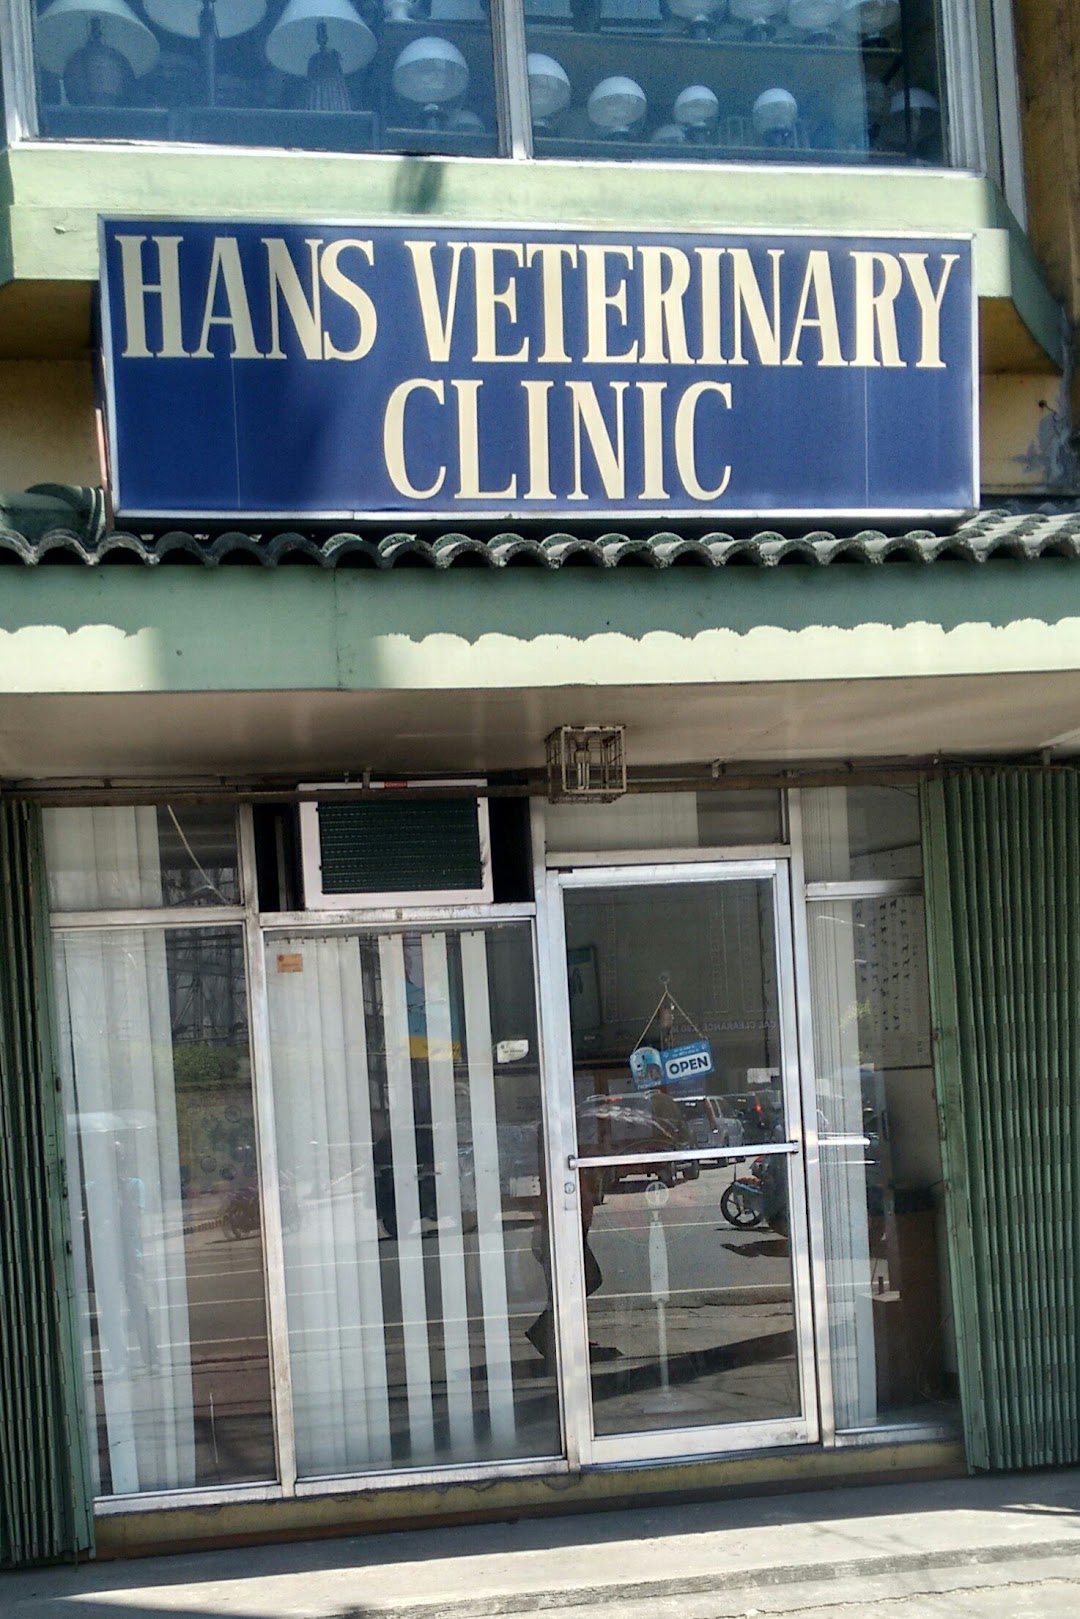 Hans Veterinary Clinic